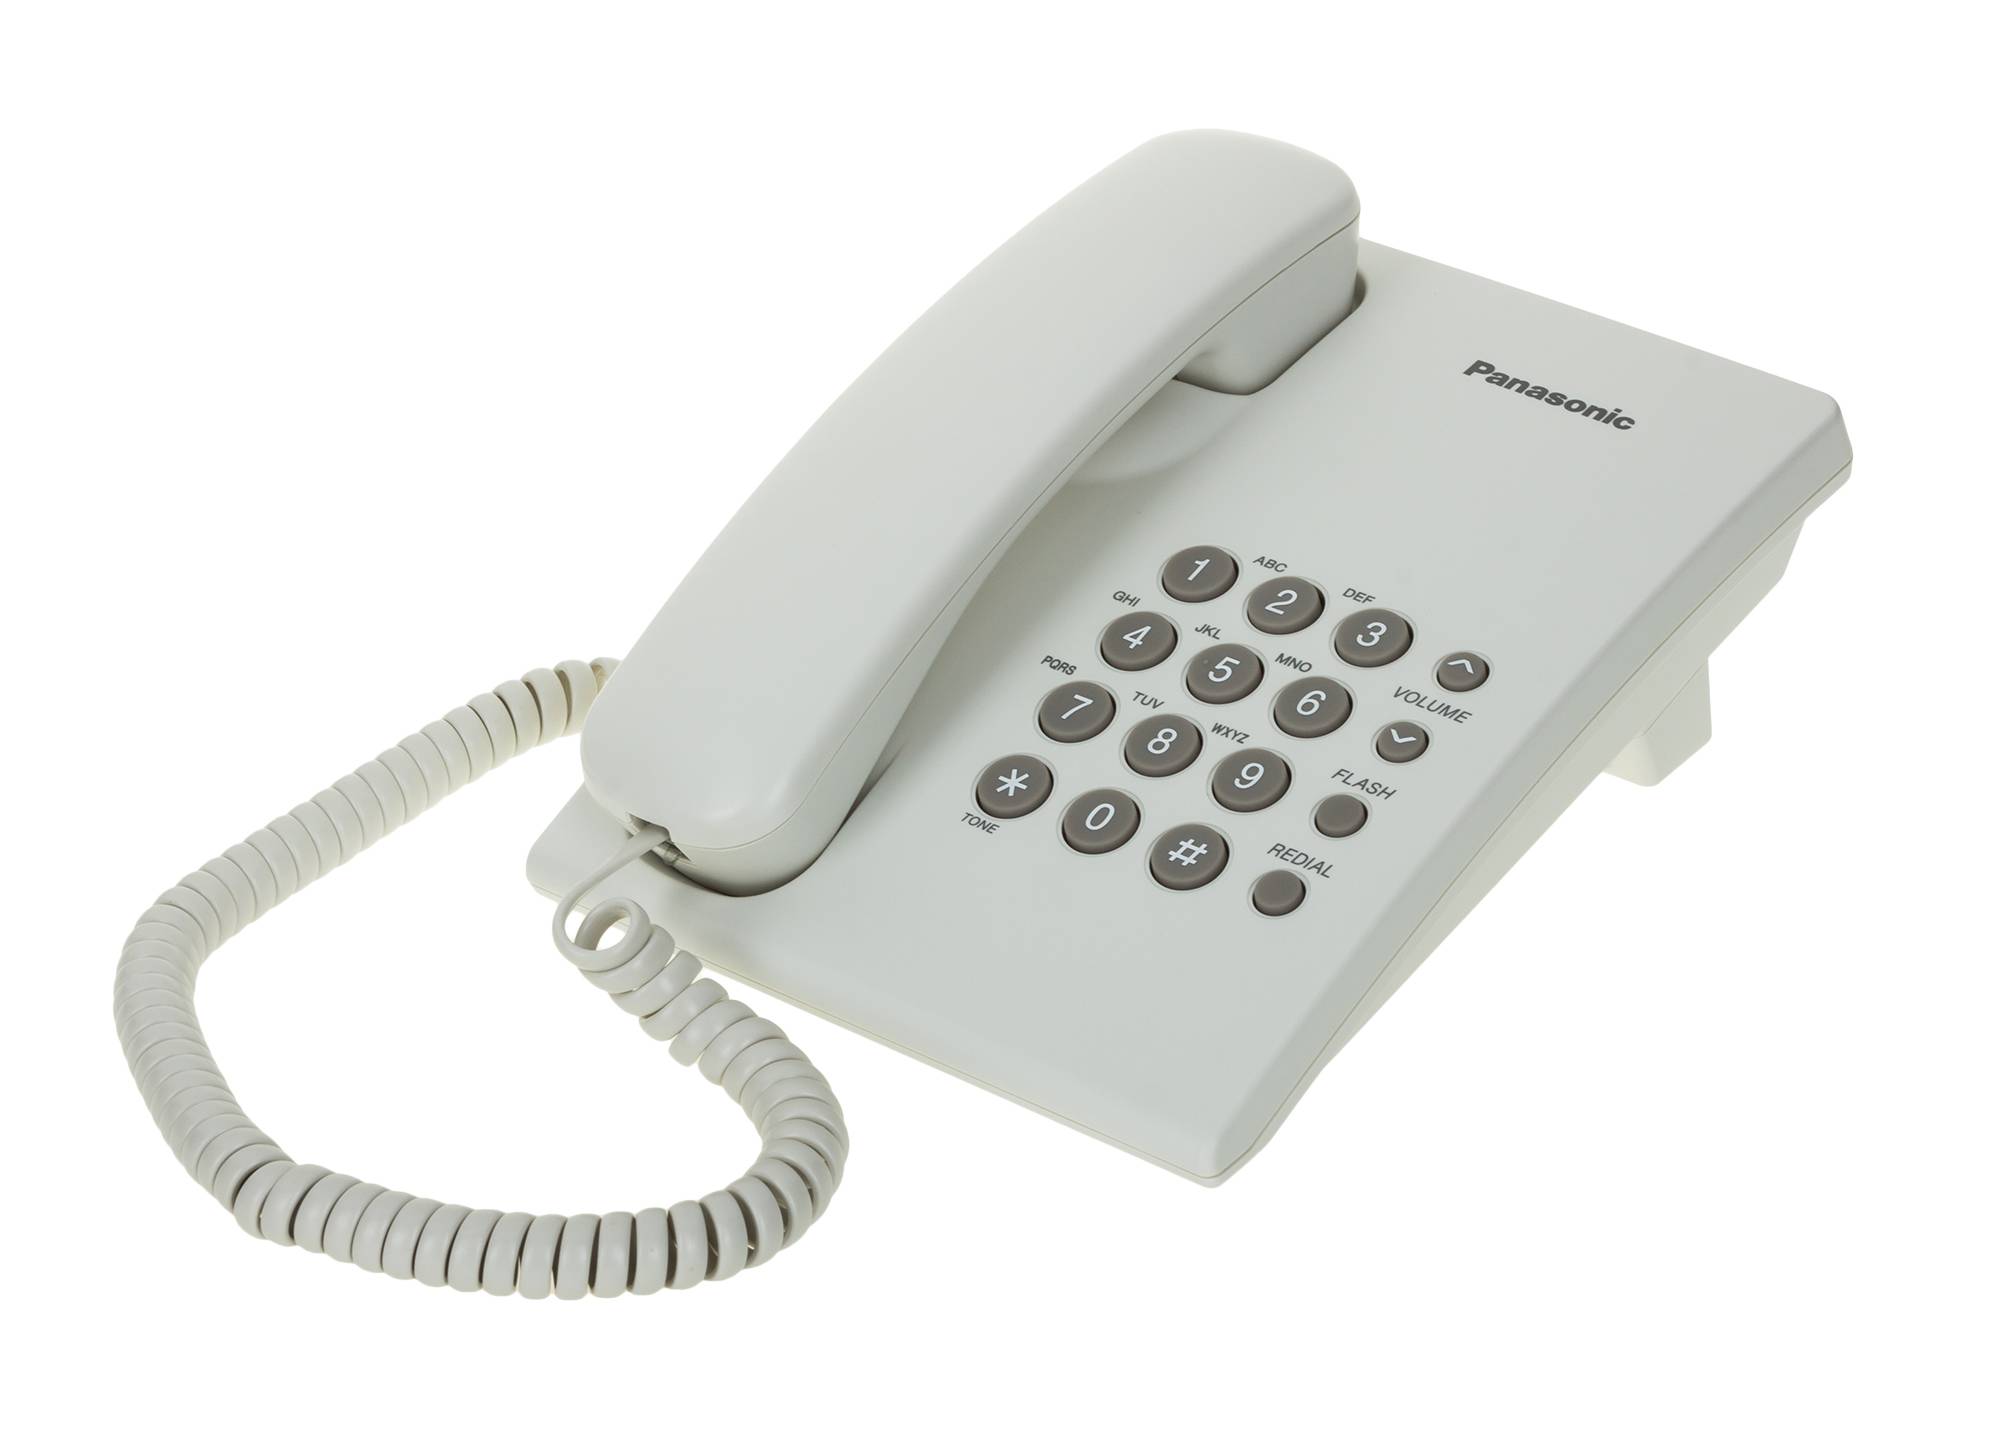 Стационарный телефон воронеж. Телефон Panasonic KX-ts2350 ruw белый. Panasonic KX-ts2350ruw белый. Телефон Panasonic KX-ts2350ruw. Аппарат телефонный проводной Panasonic KX-ts2350.